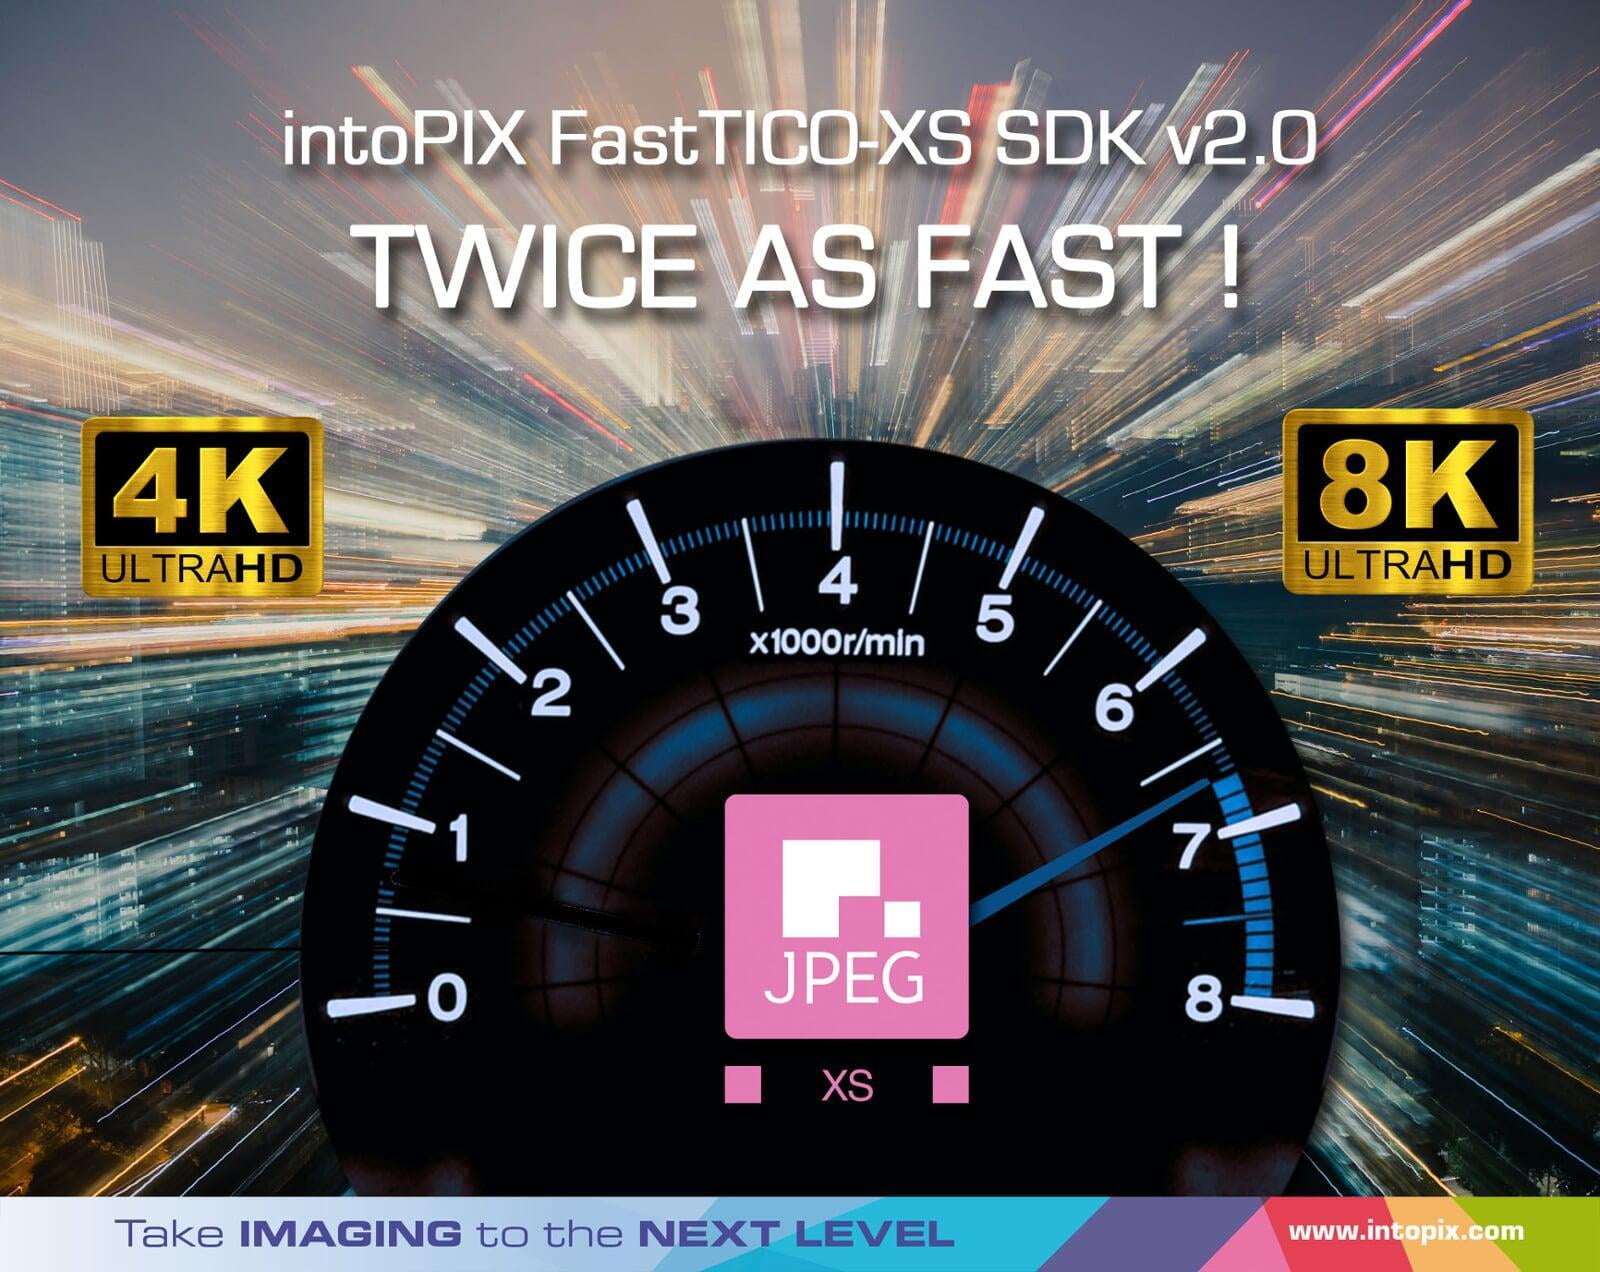 intoPIX Ships v2.0 of FastTICO-XS SDK for JPEG XS on x86-64 CPU platforms